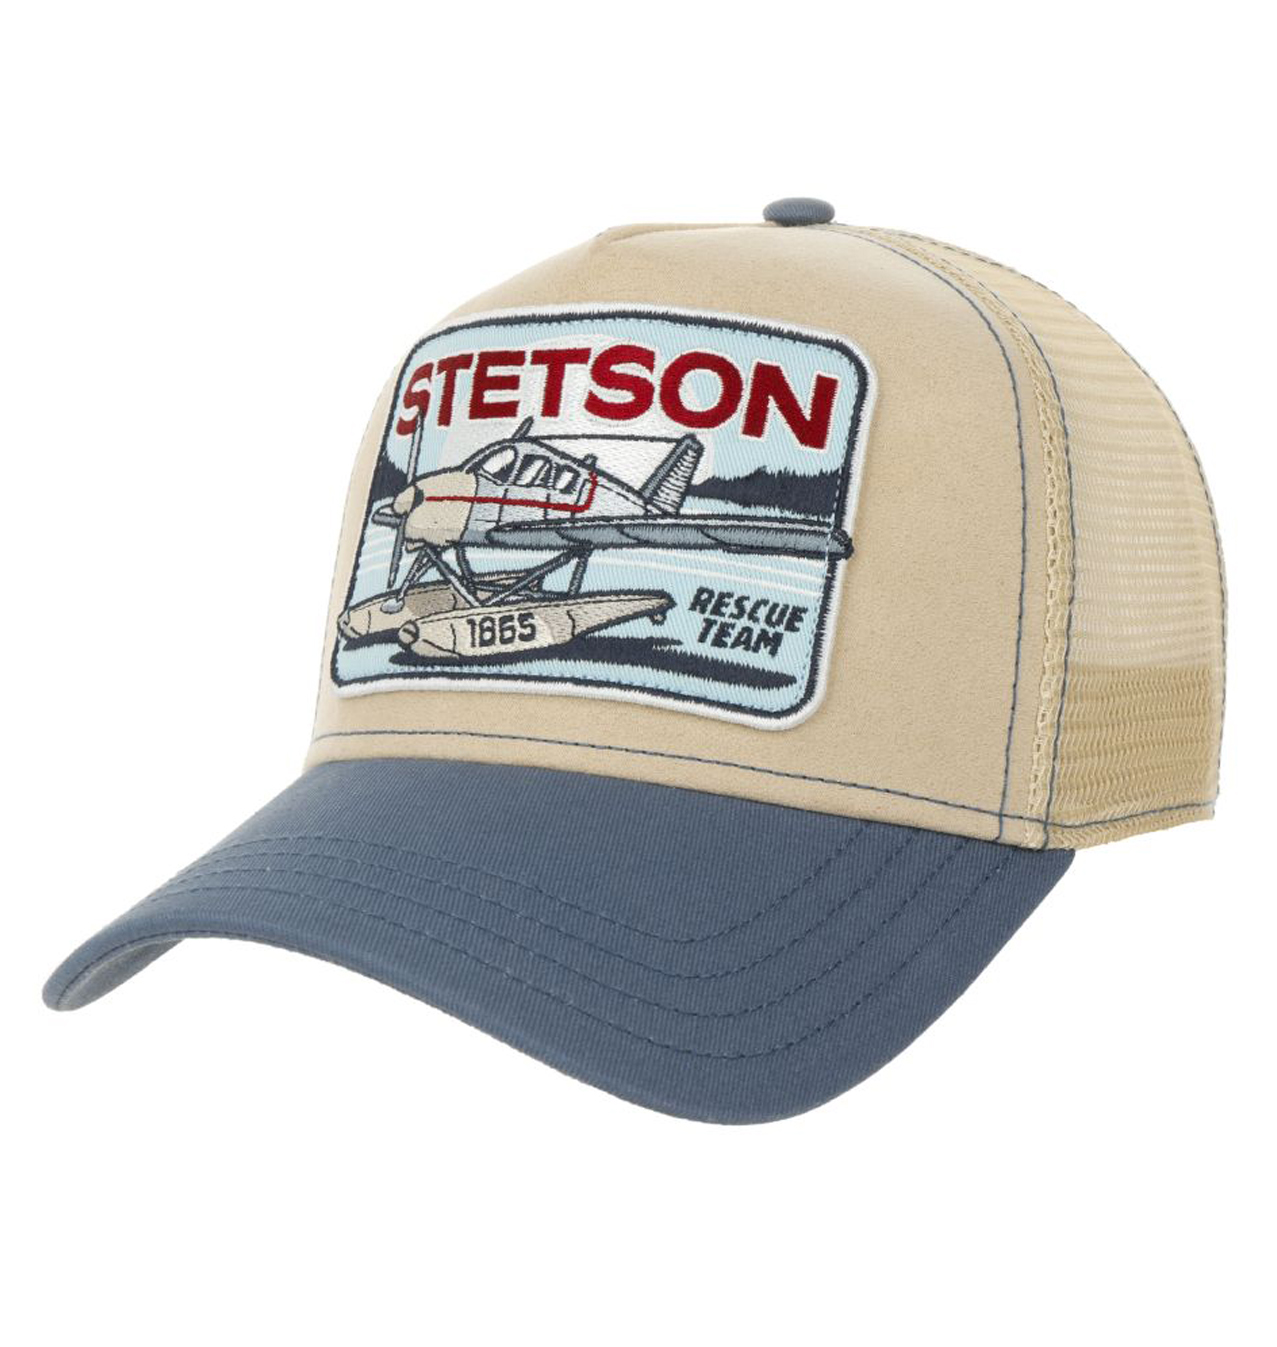 Stetson---Rescue-Team-Trucker-Cap---Beige-Blue1